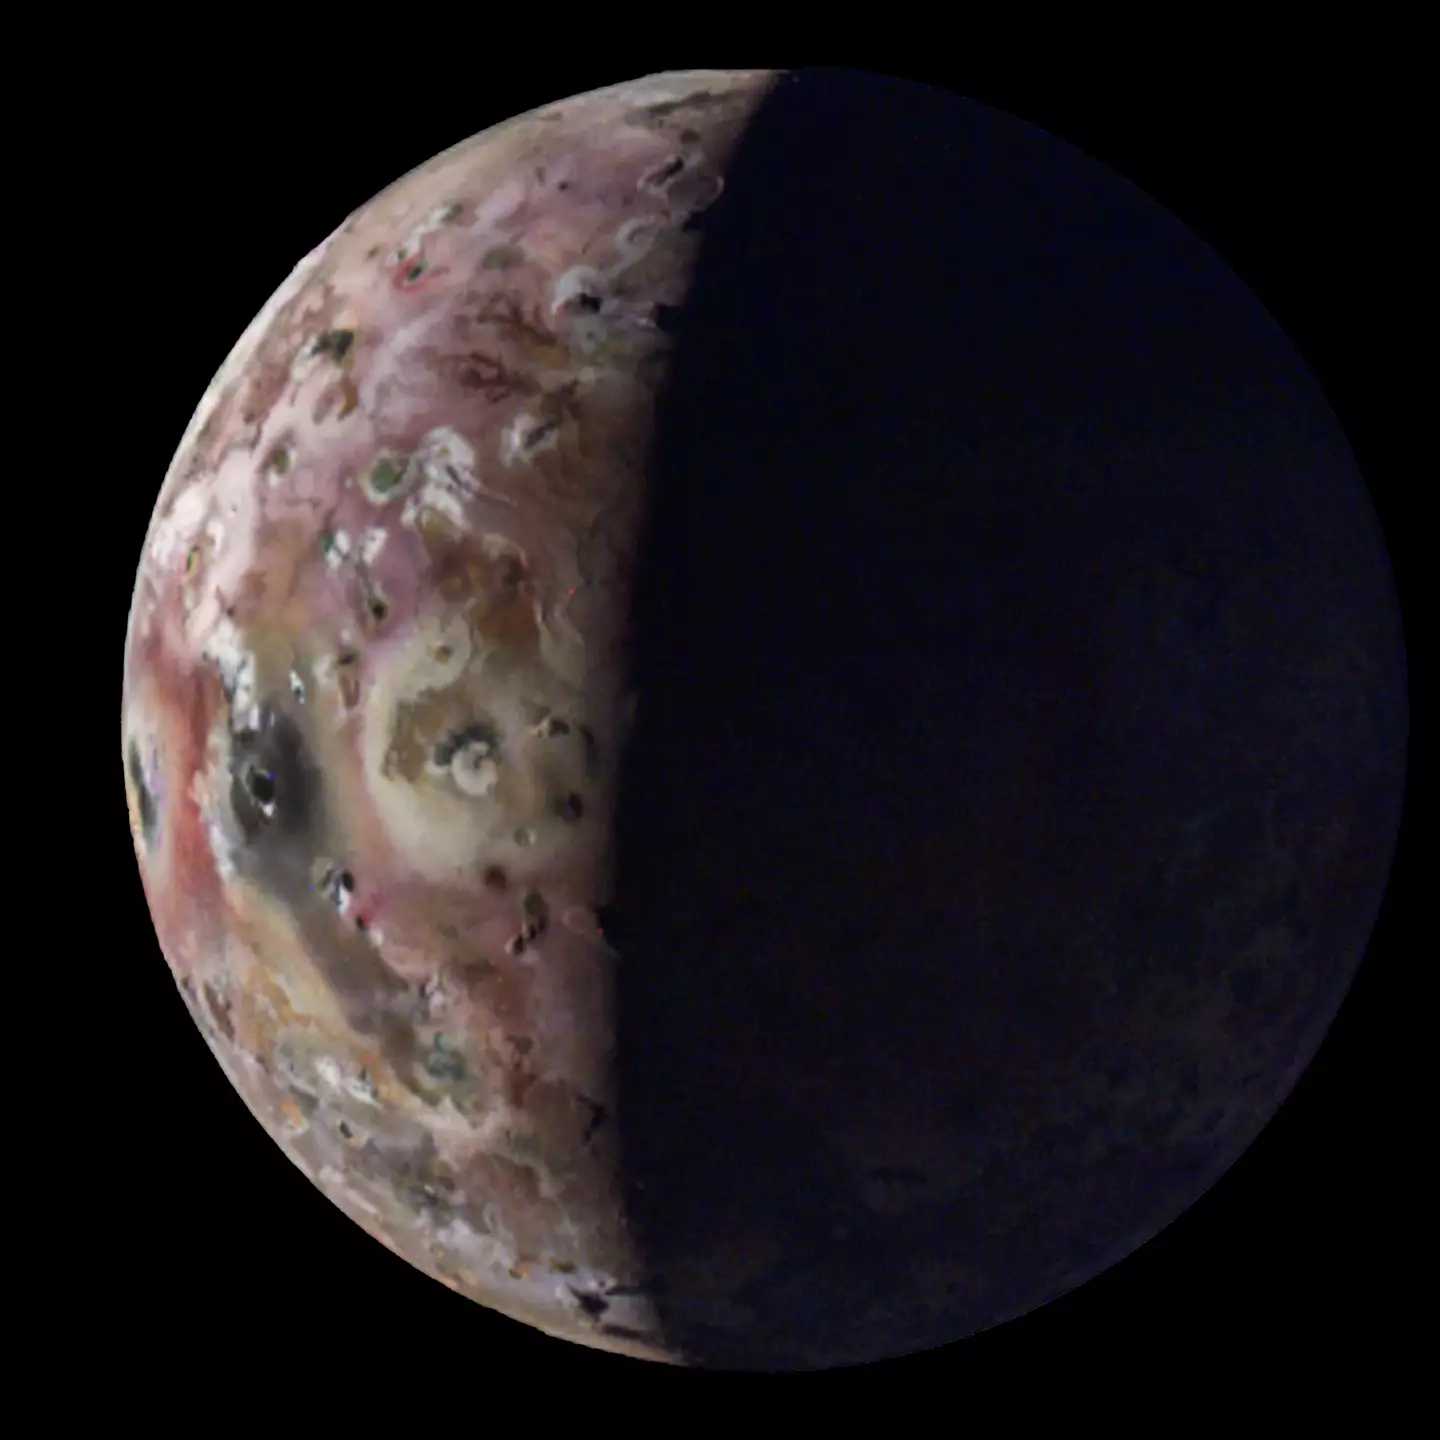 New image of Jupiter moon Io (Gerald Eichstädt/Thomas Thomopoulos)